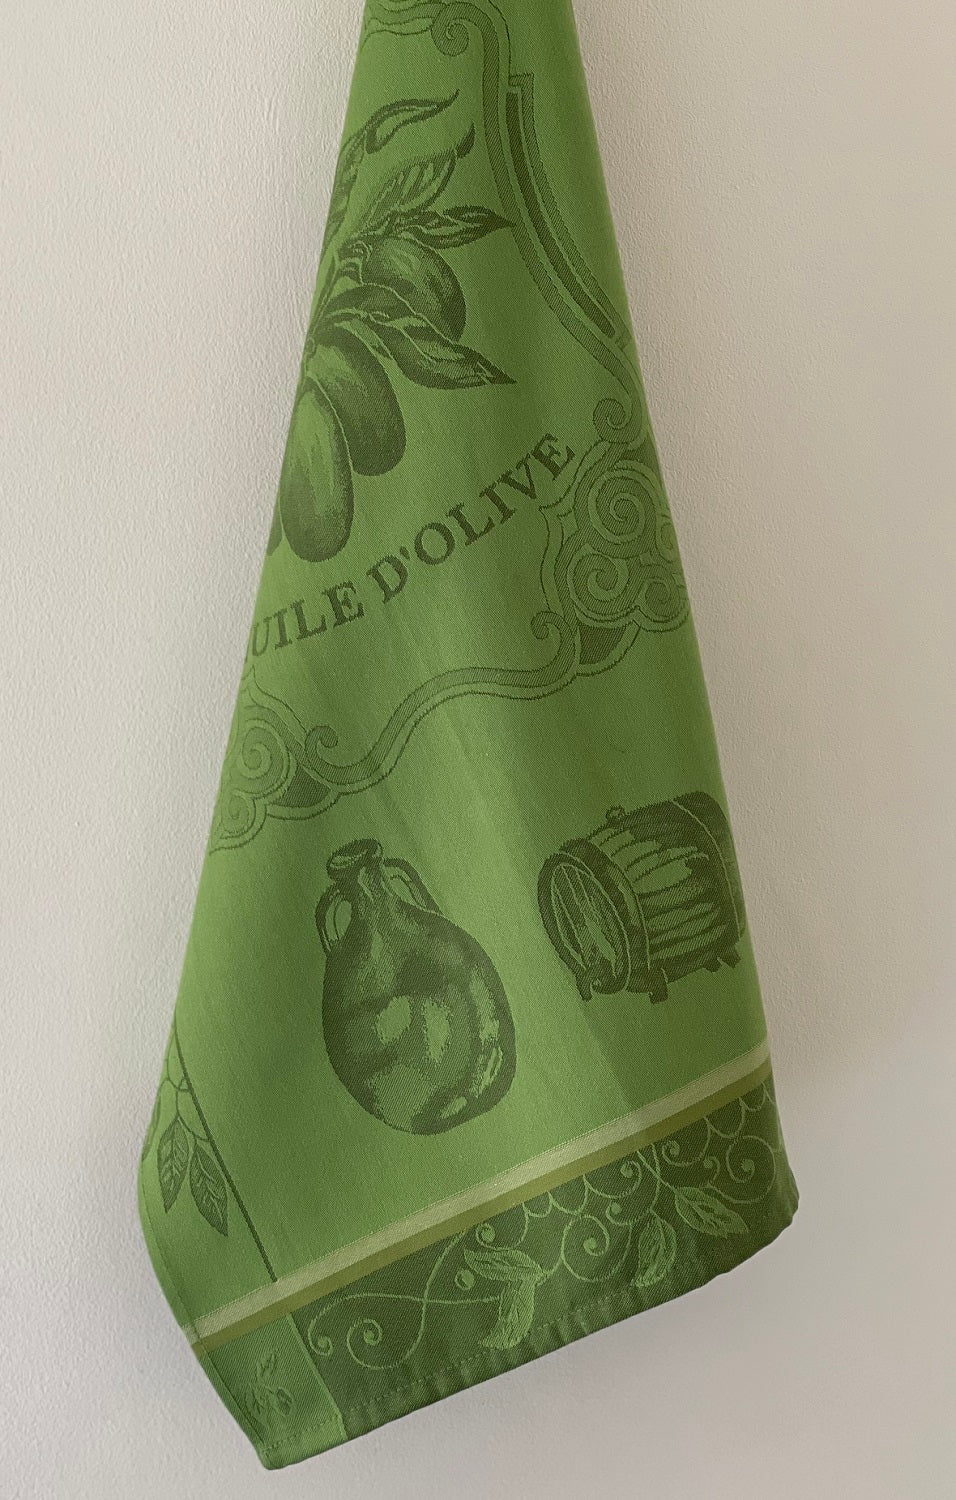 Coucke “Huile Surfine Verte", Woven cotton tea towel. Designed in France.